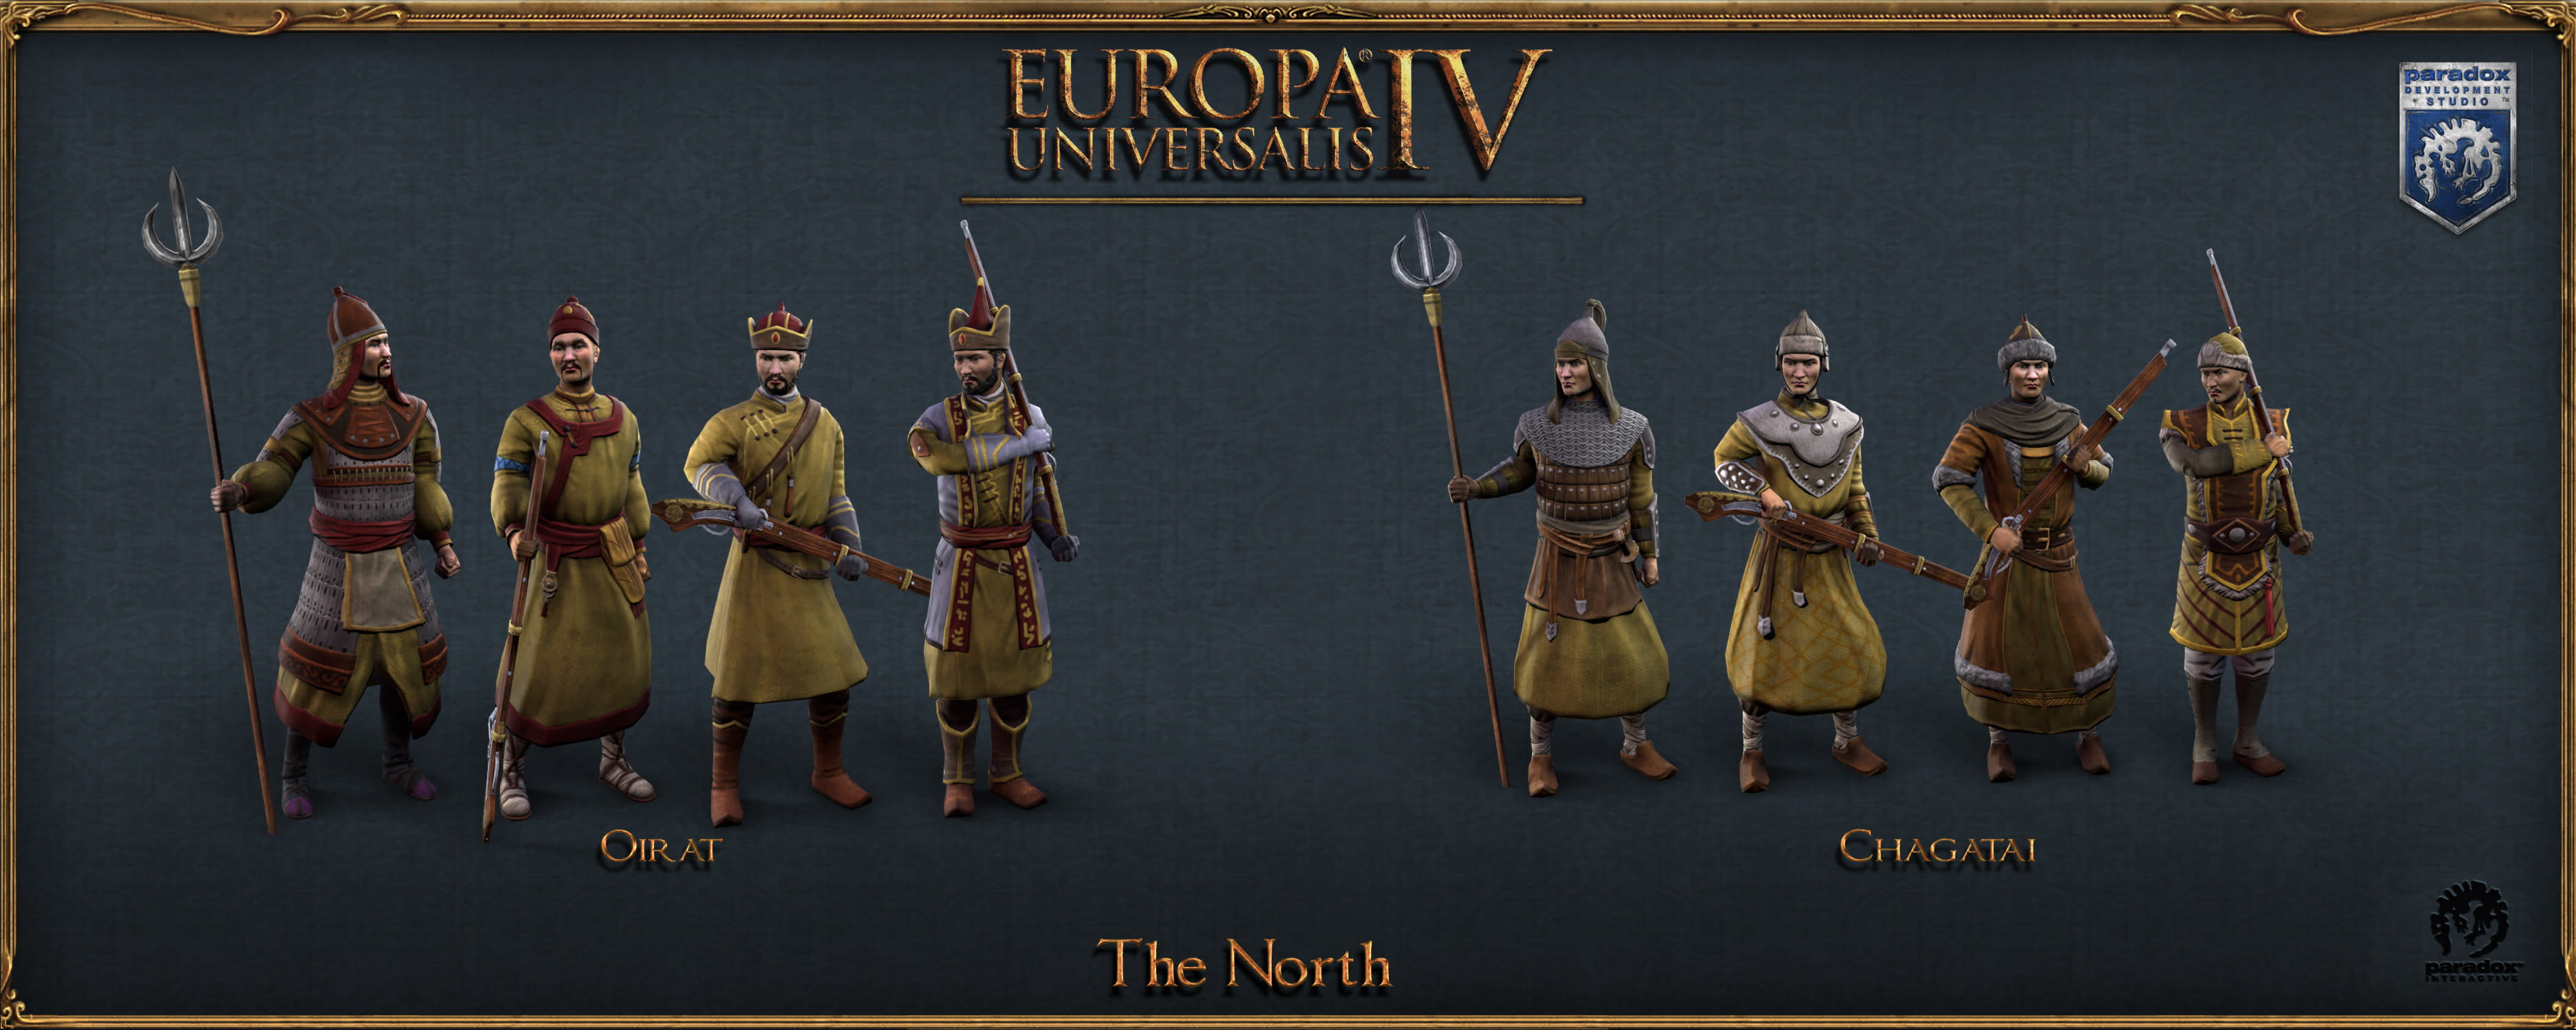 Europa Universalis IV: Mandate of Heaven Content Pack (screenshot 5)